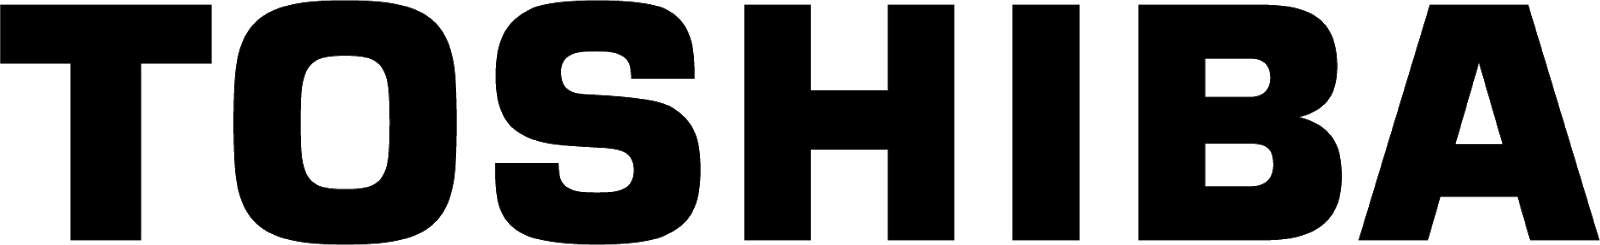 Toshiba TV Logo - Sharp, Toshiba, Videocon LED TV LOGO Free Download